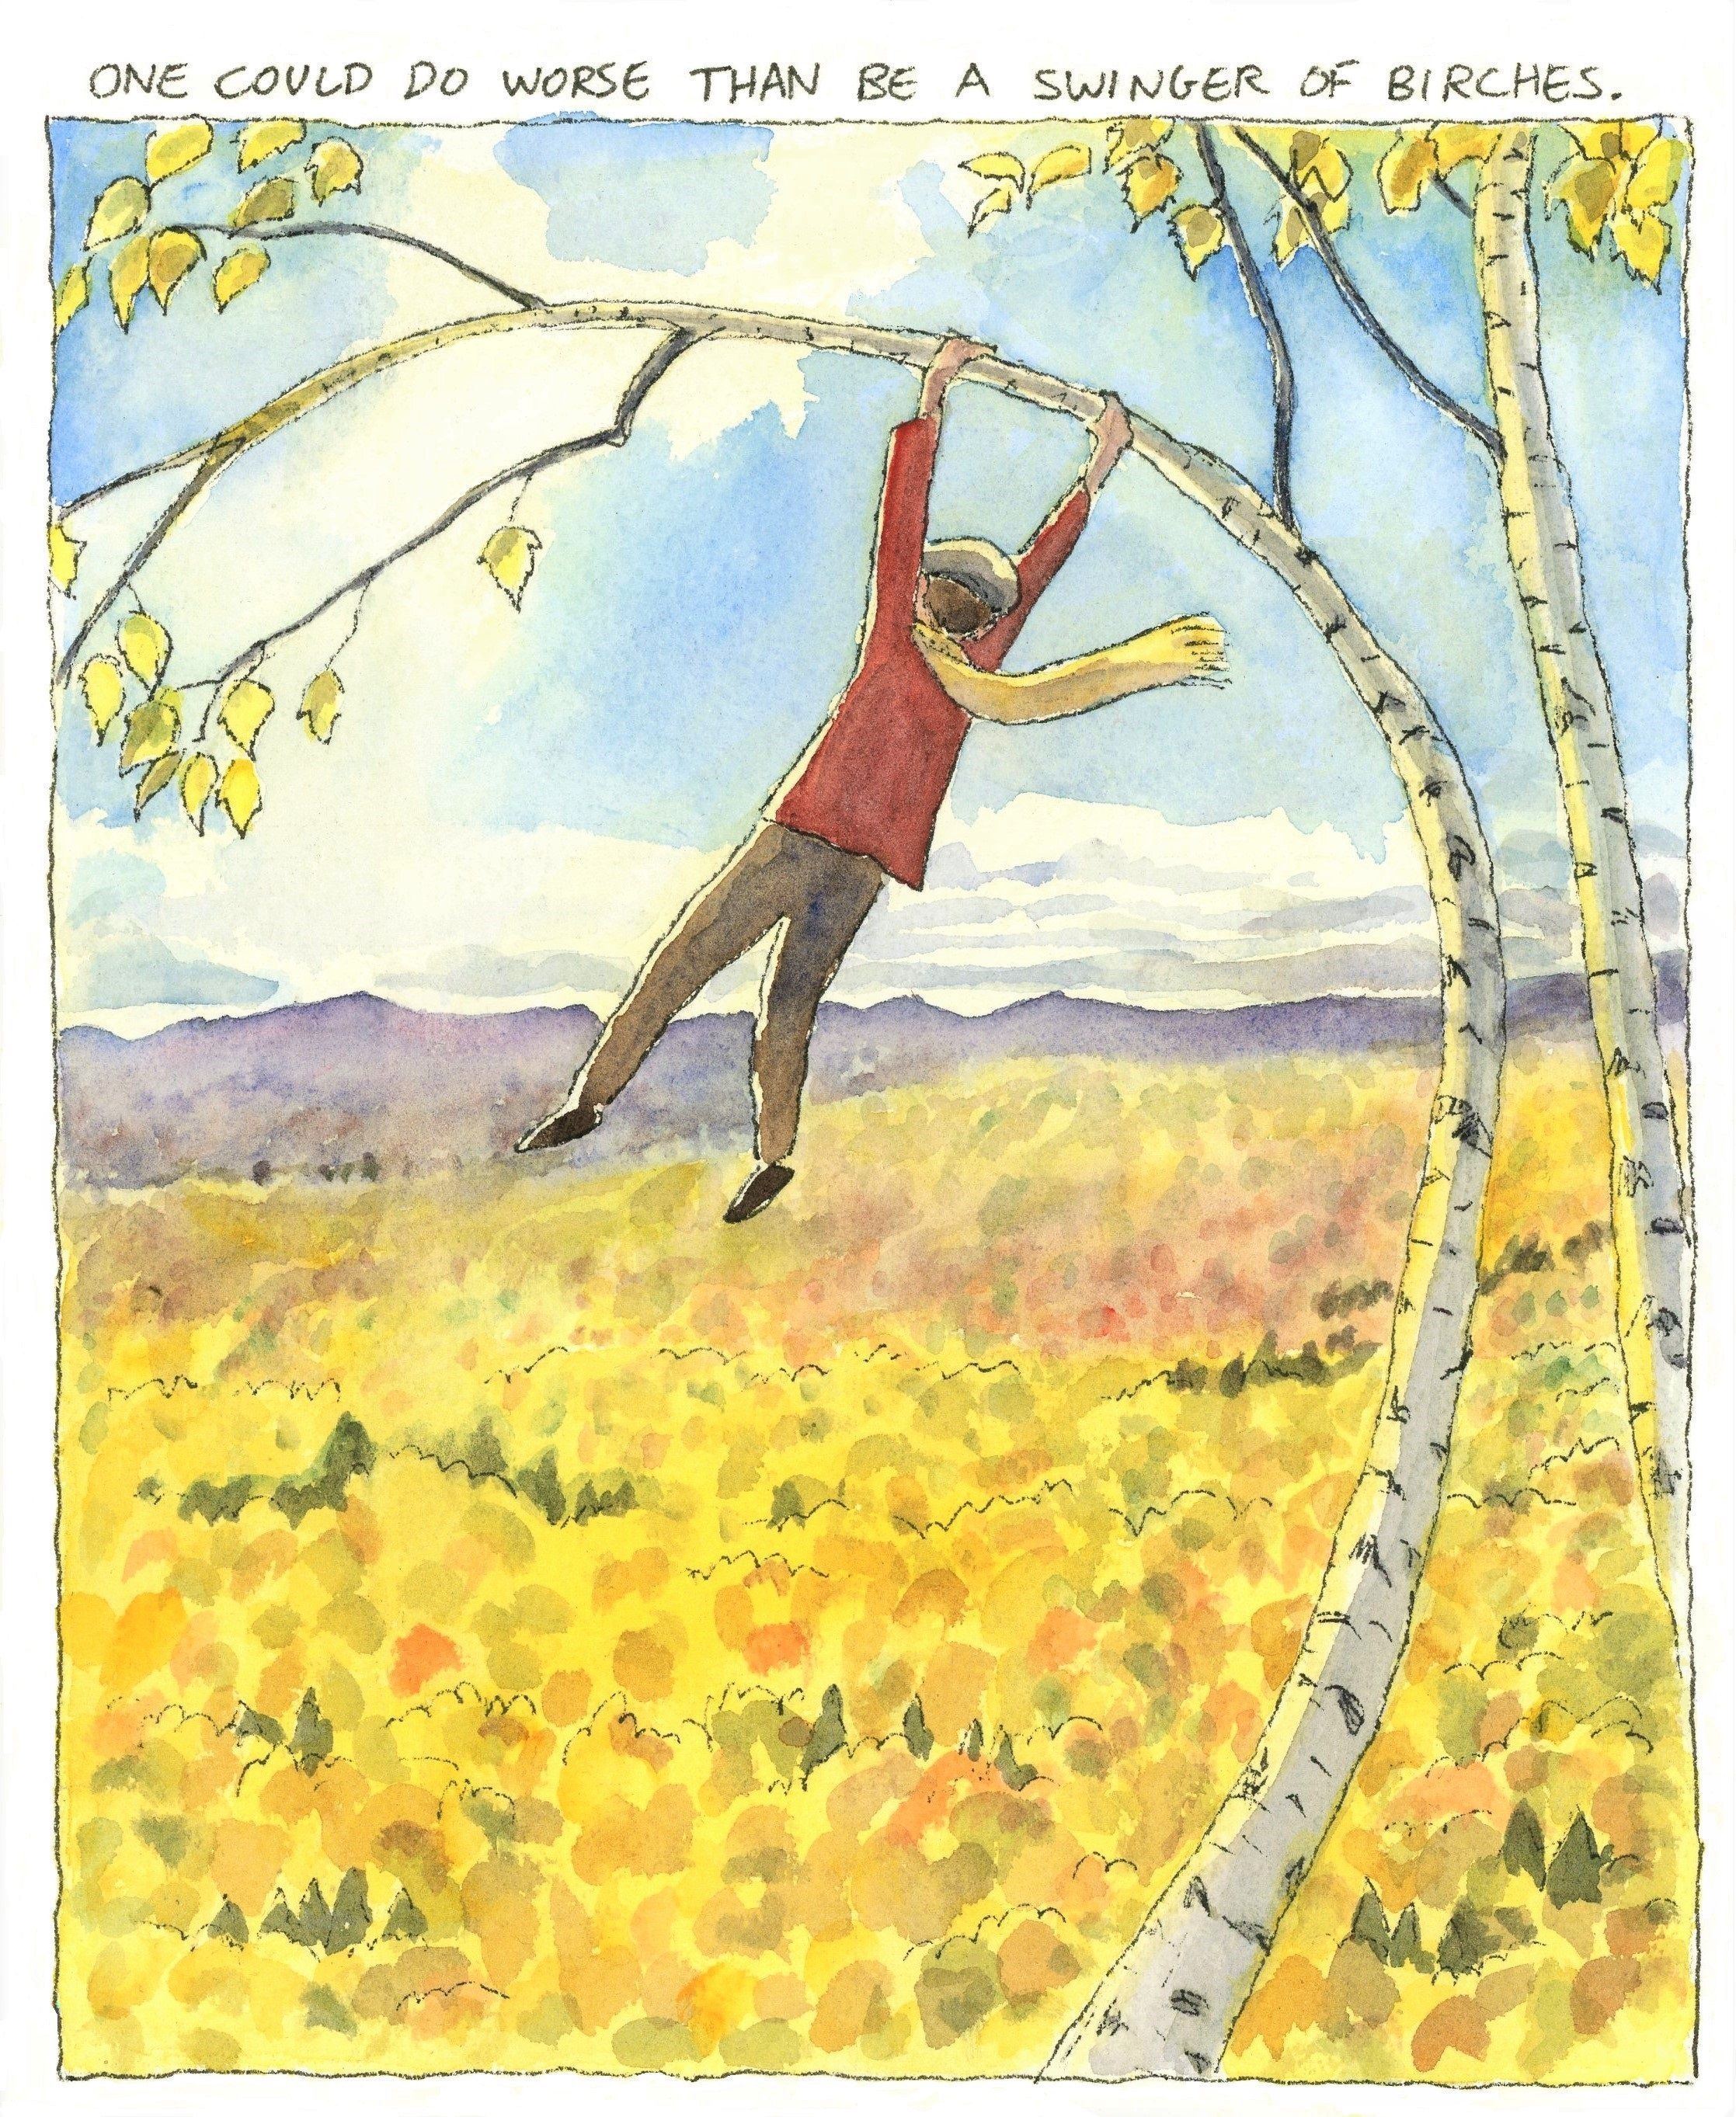 Swinger of birches poem 